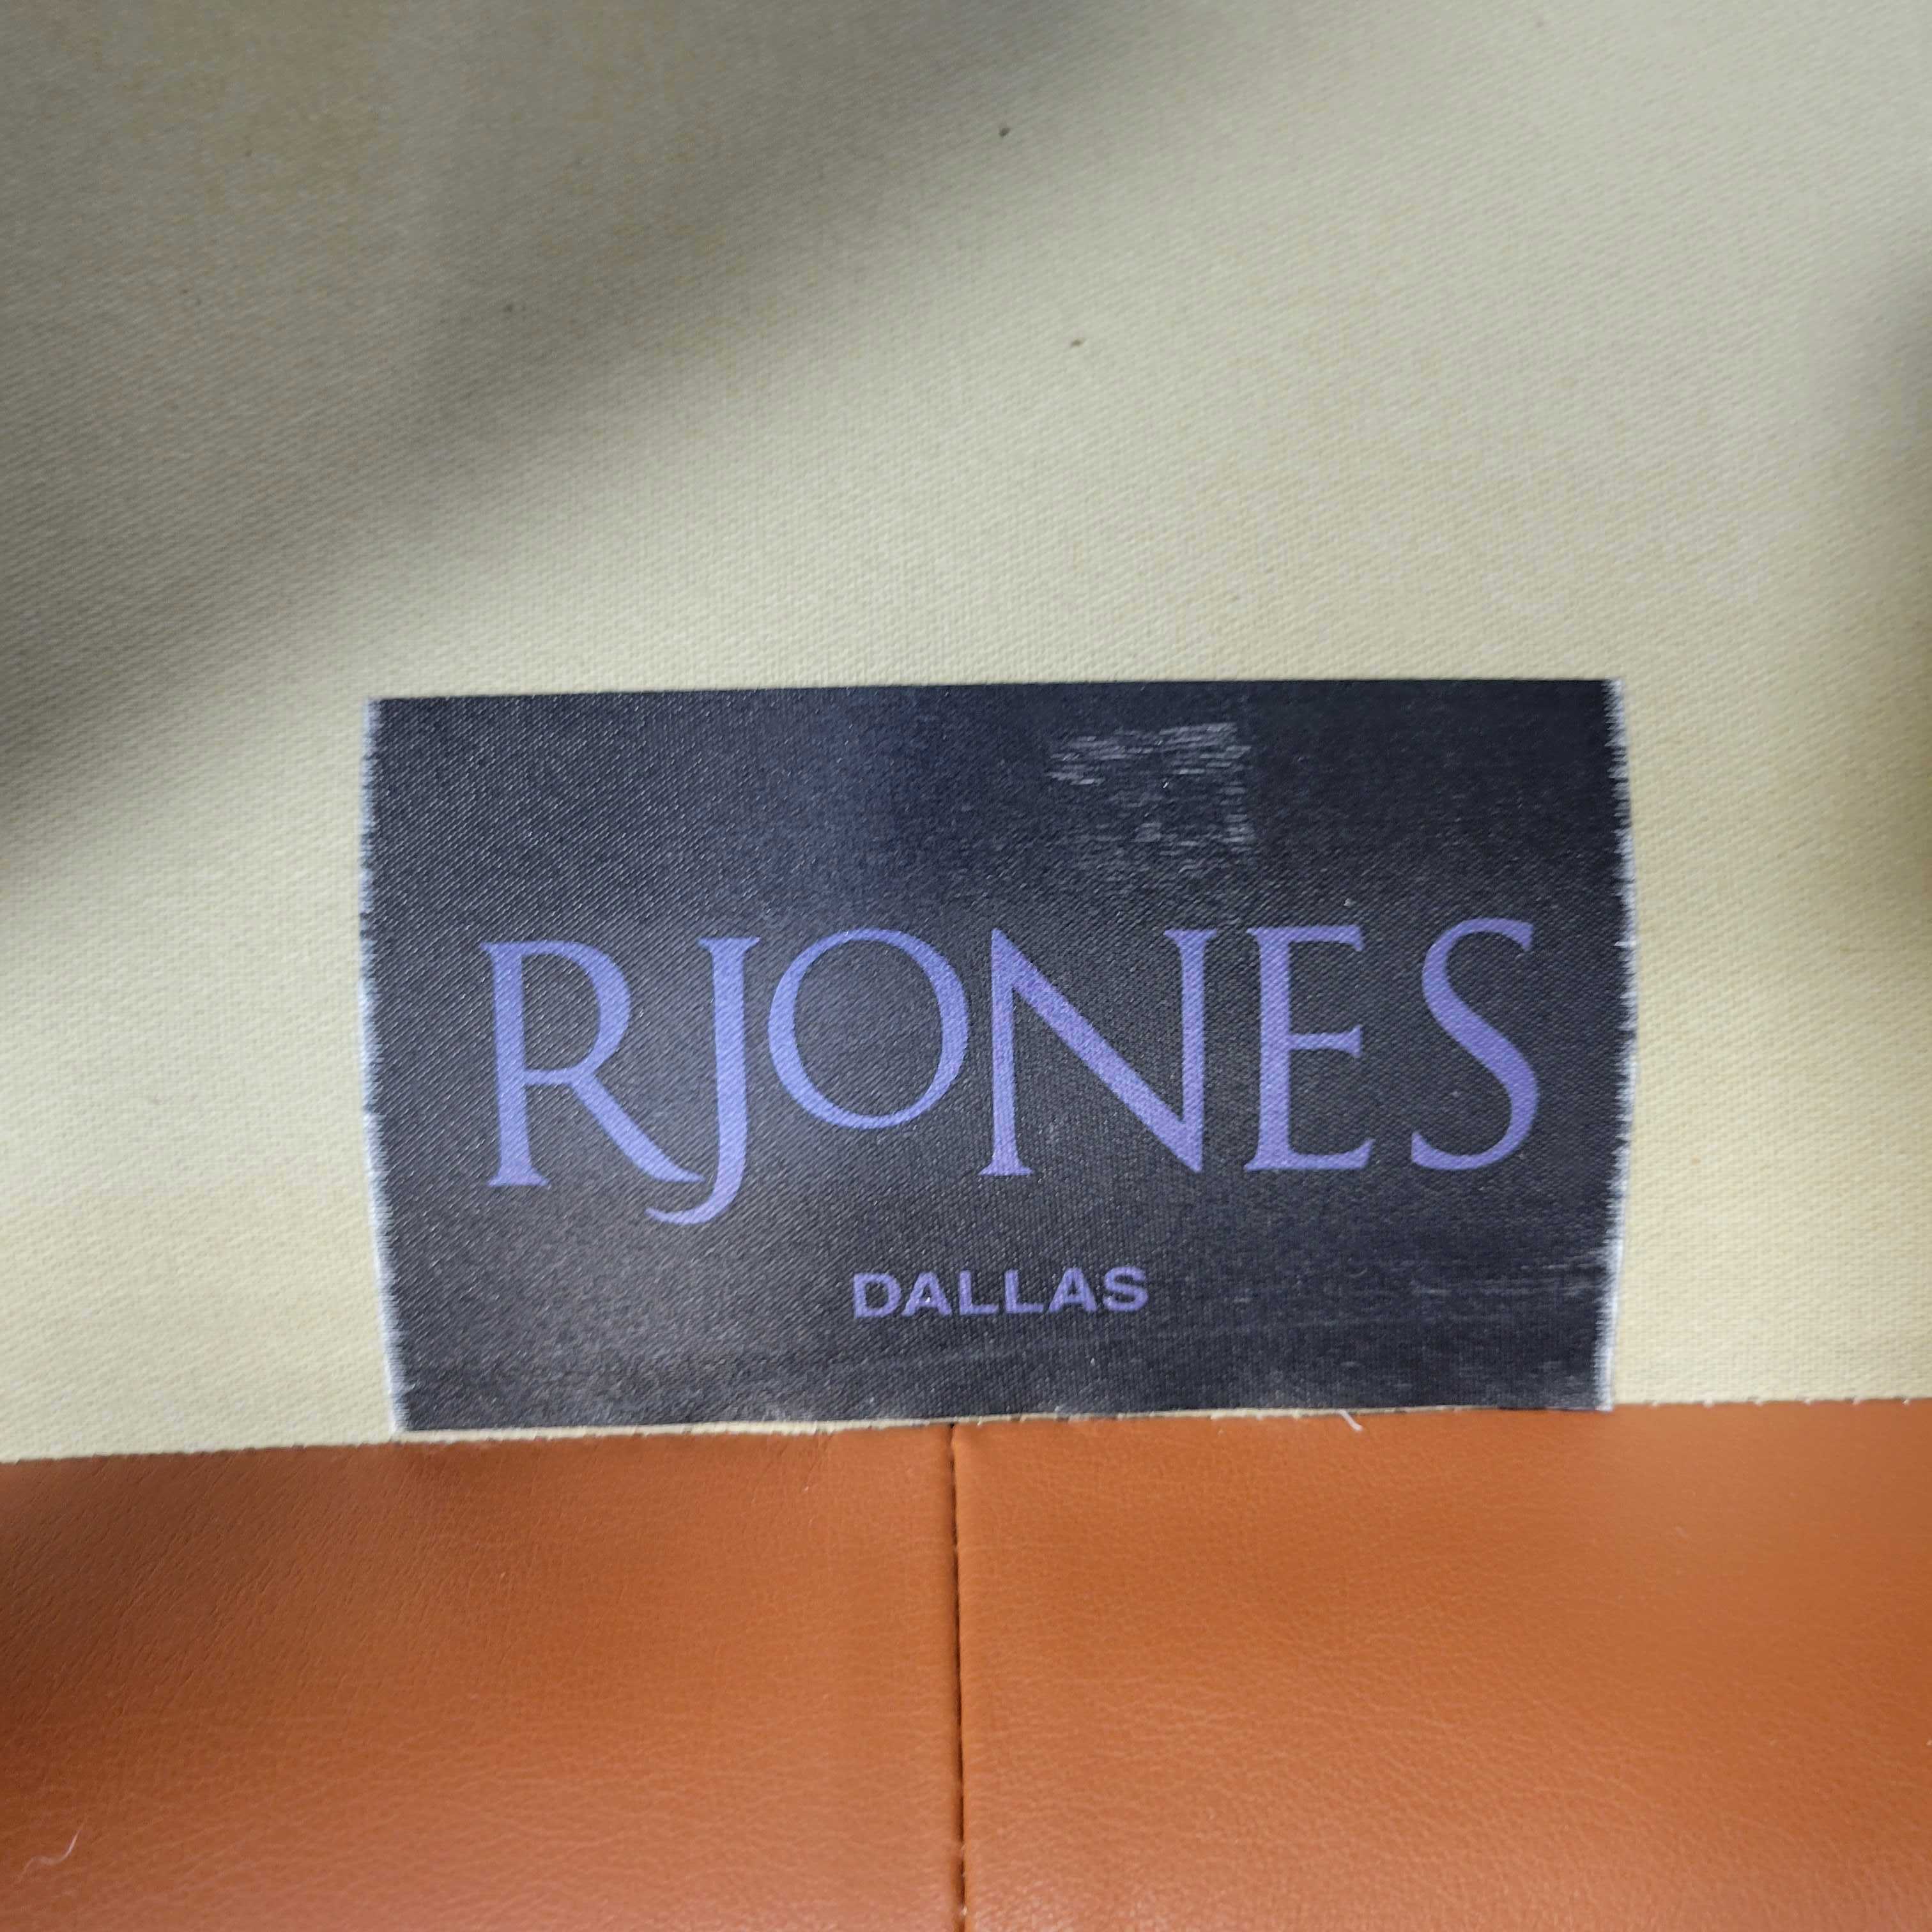 36"x 34"x 32" R Jones Burnt Orange Leather Modern Swivel Chair